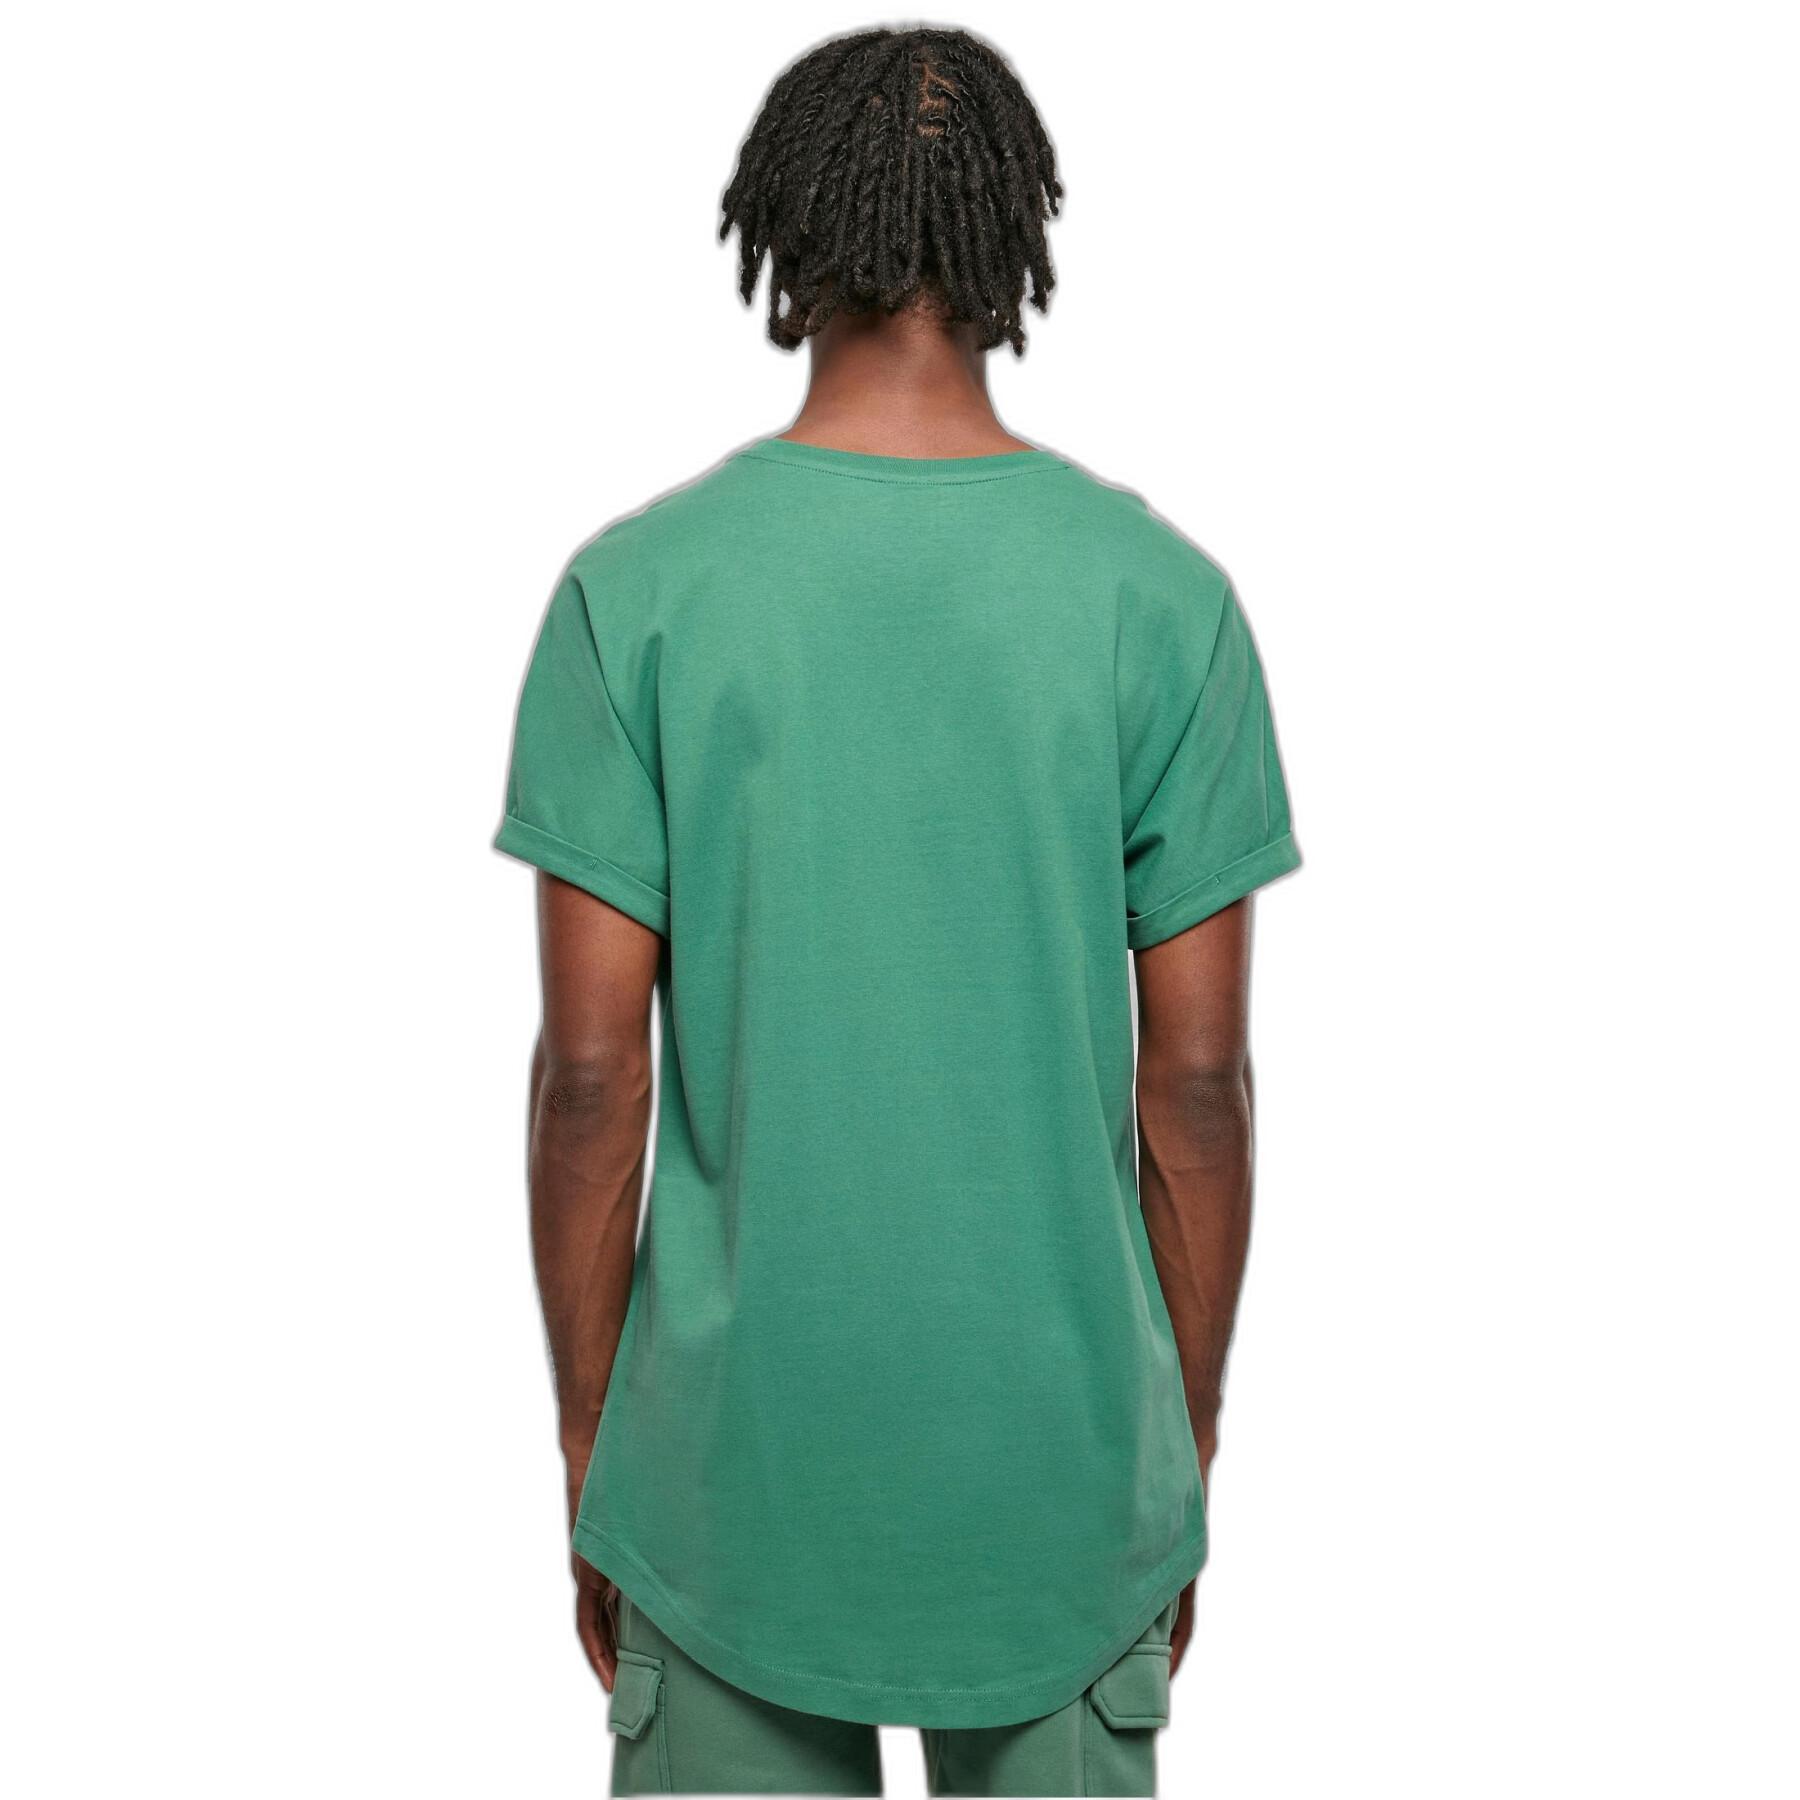 Long cuffed T-shirt large sizes Urban Classics